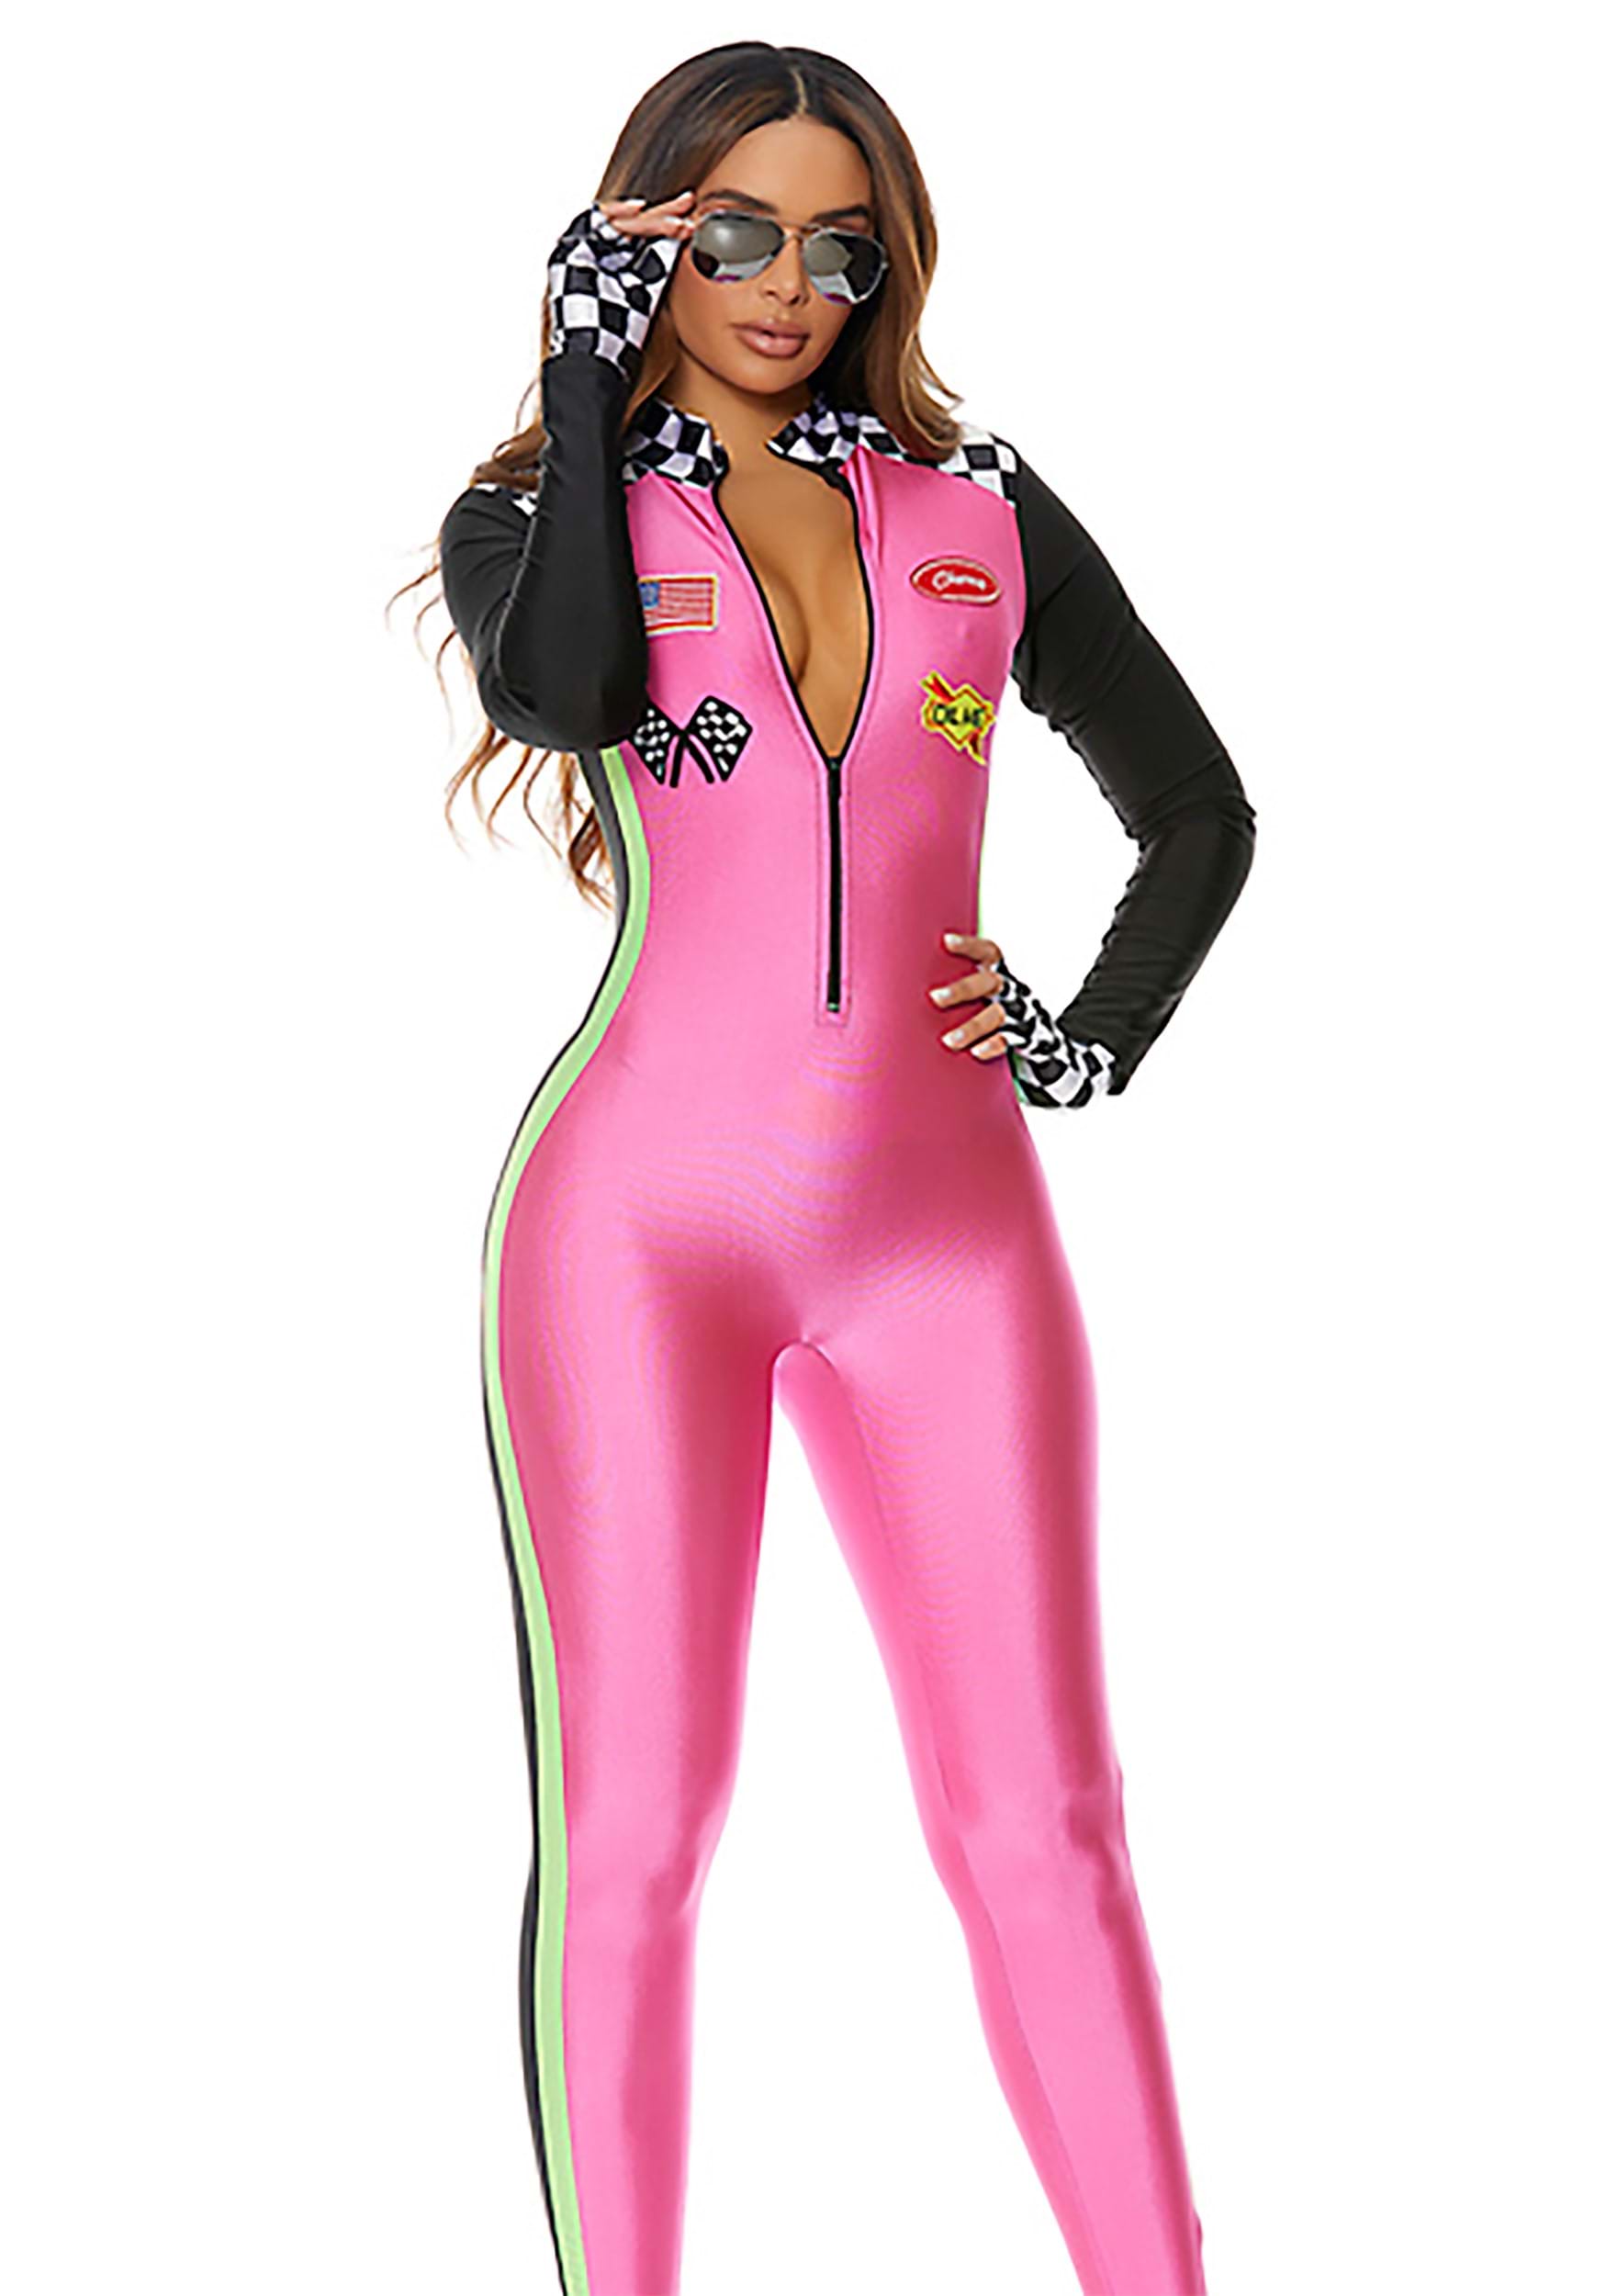 Image of Women's Racecar Driver Costume ID FP550348-M/L